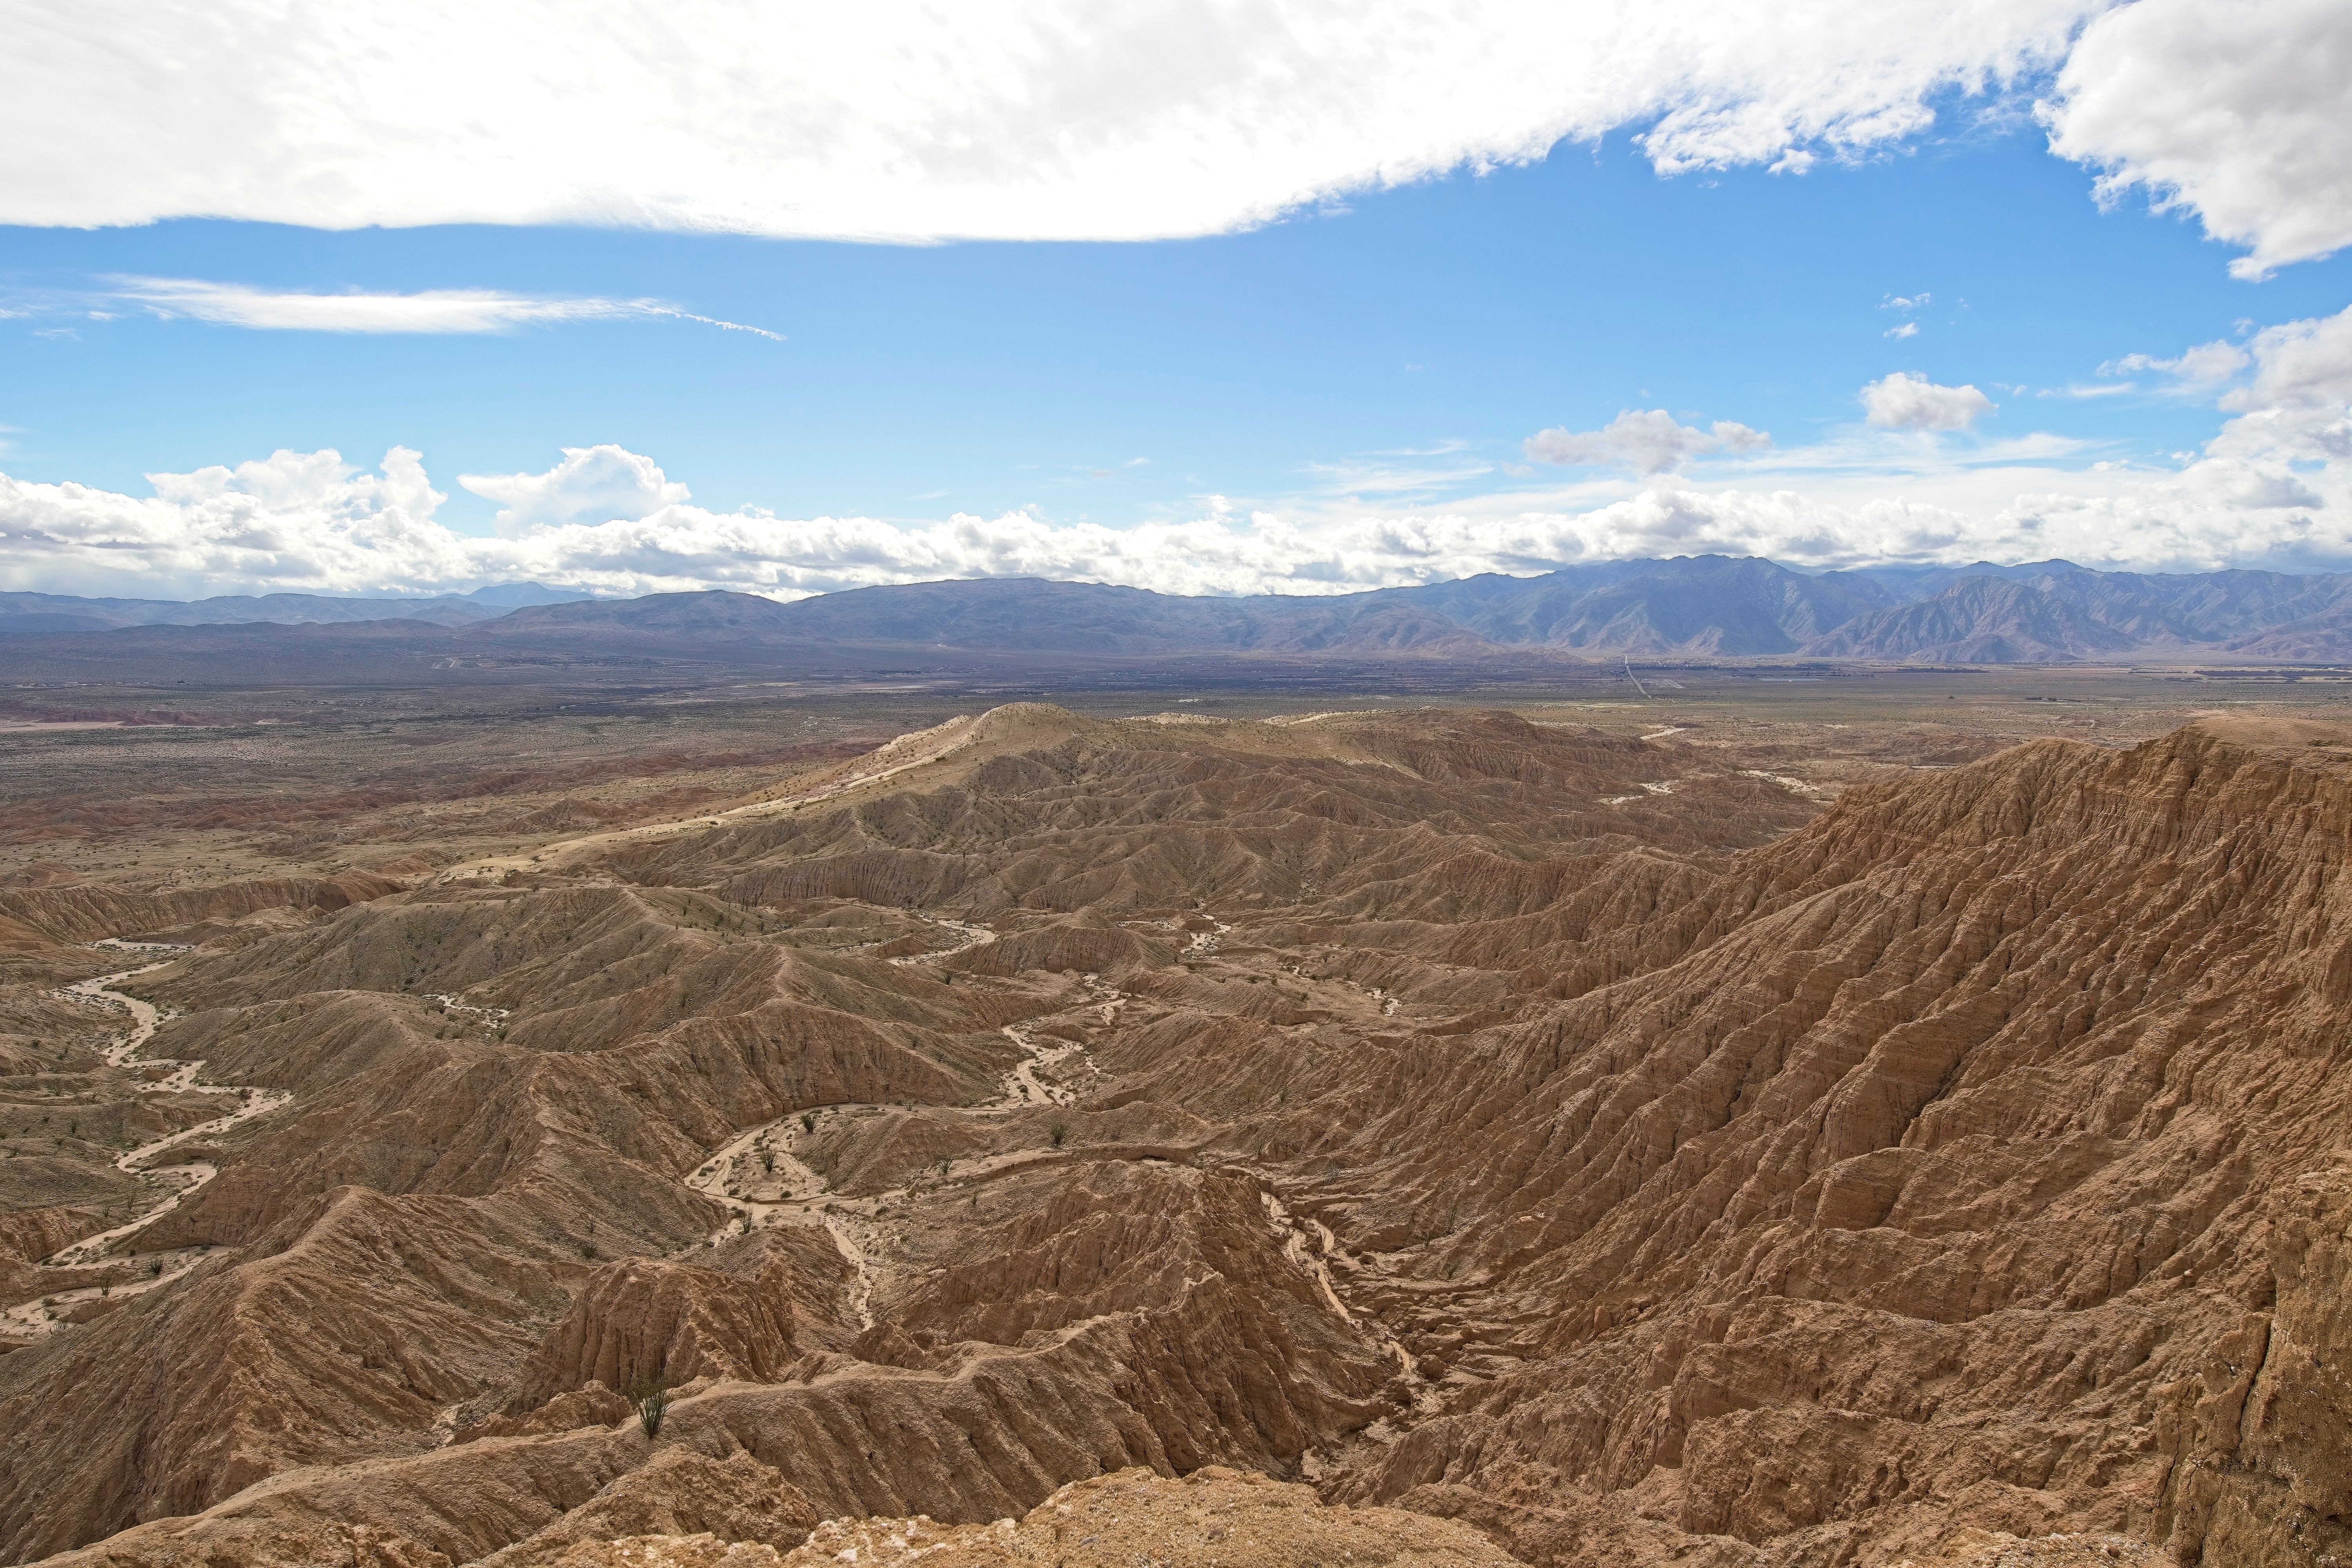 View over the badlands in California’s Anza-Borrego Desert Park